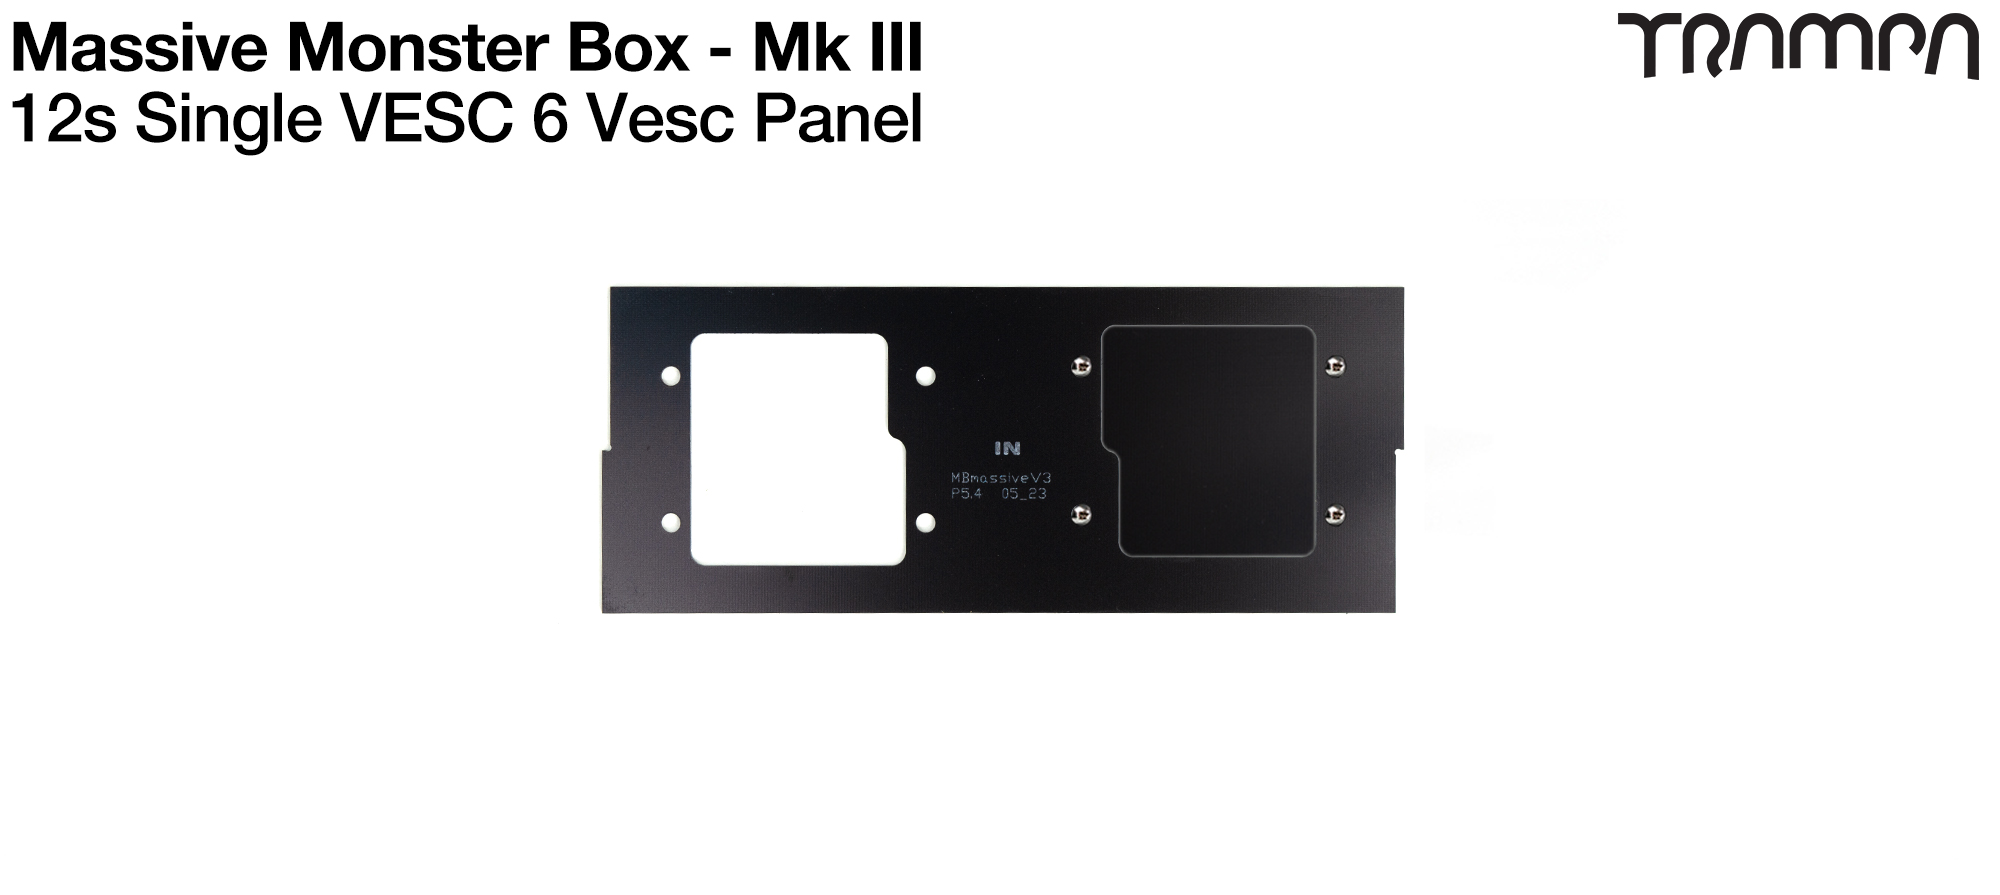 Mk III MASSIVE Monster Box - Panel to fit 1x VESC 6 